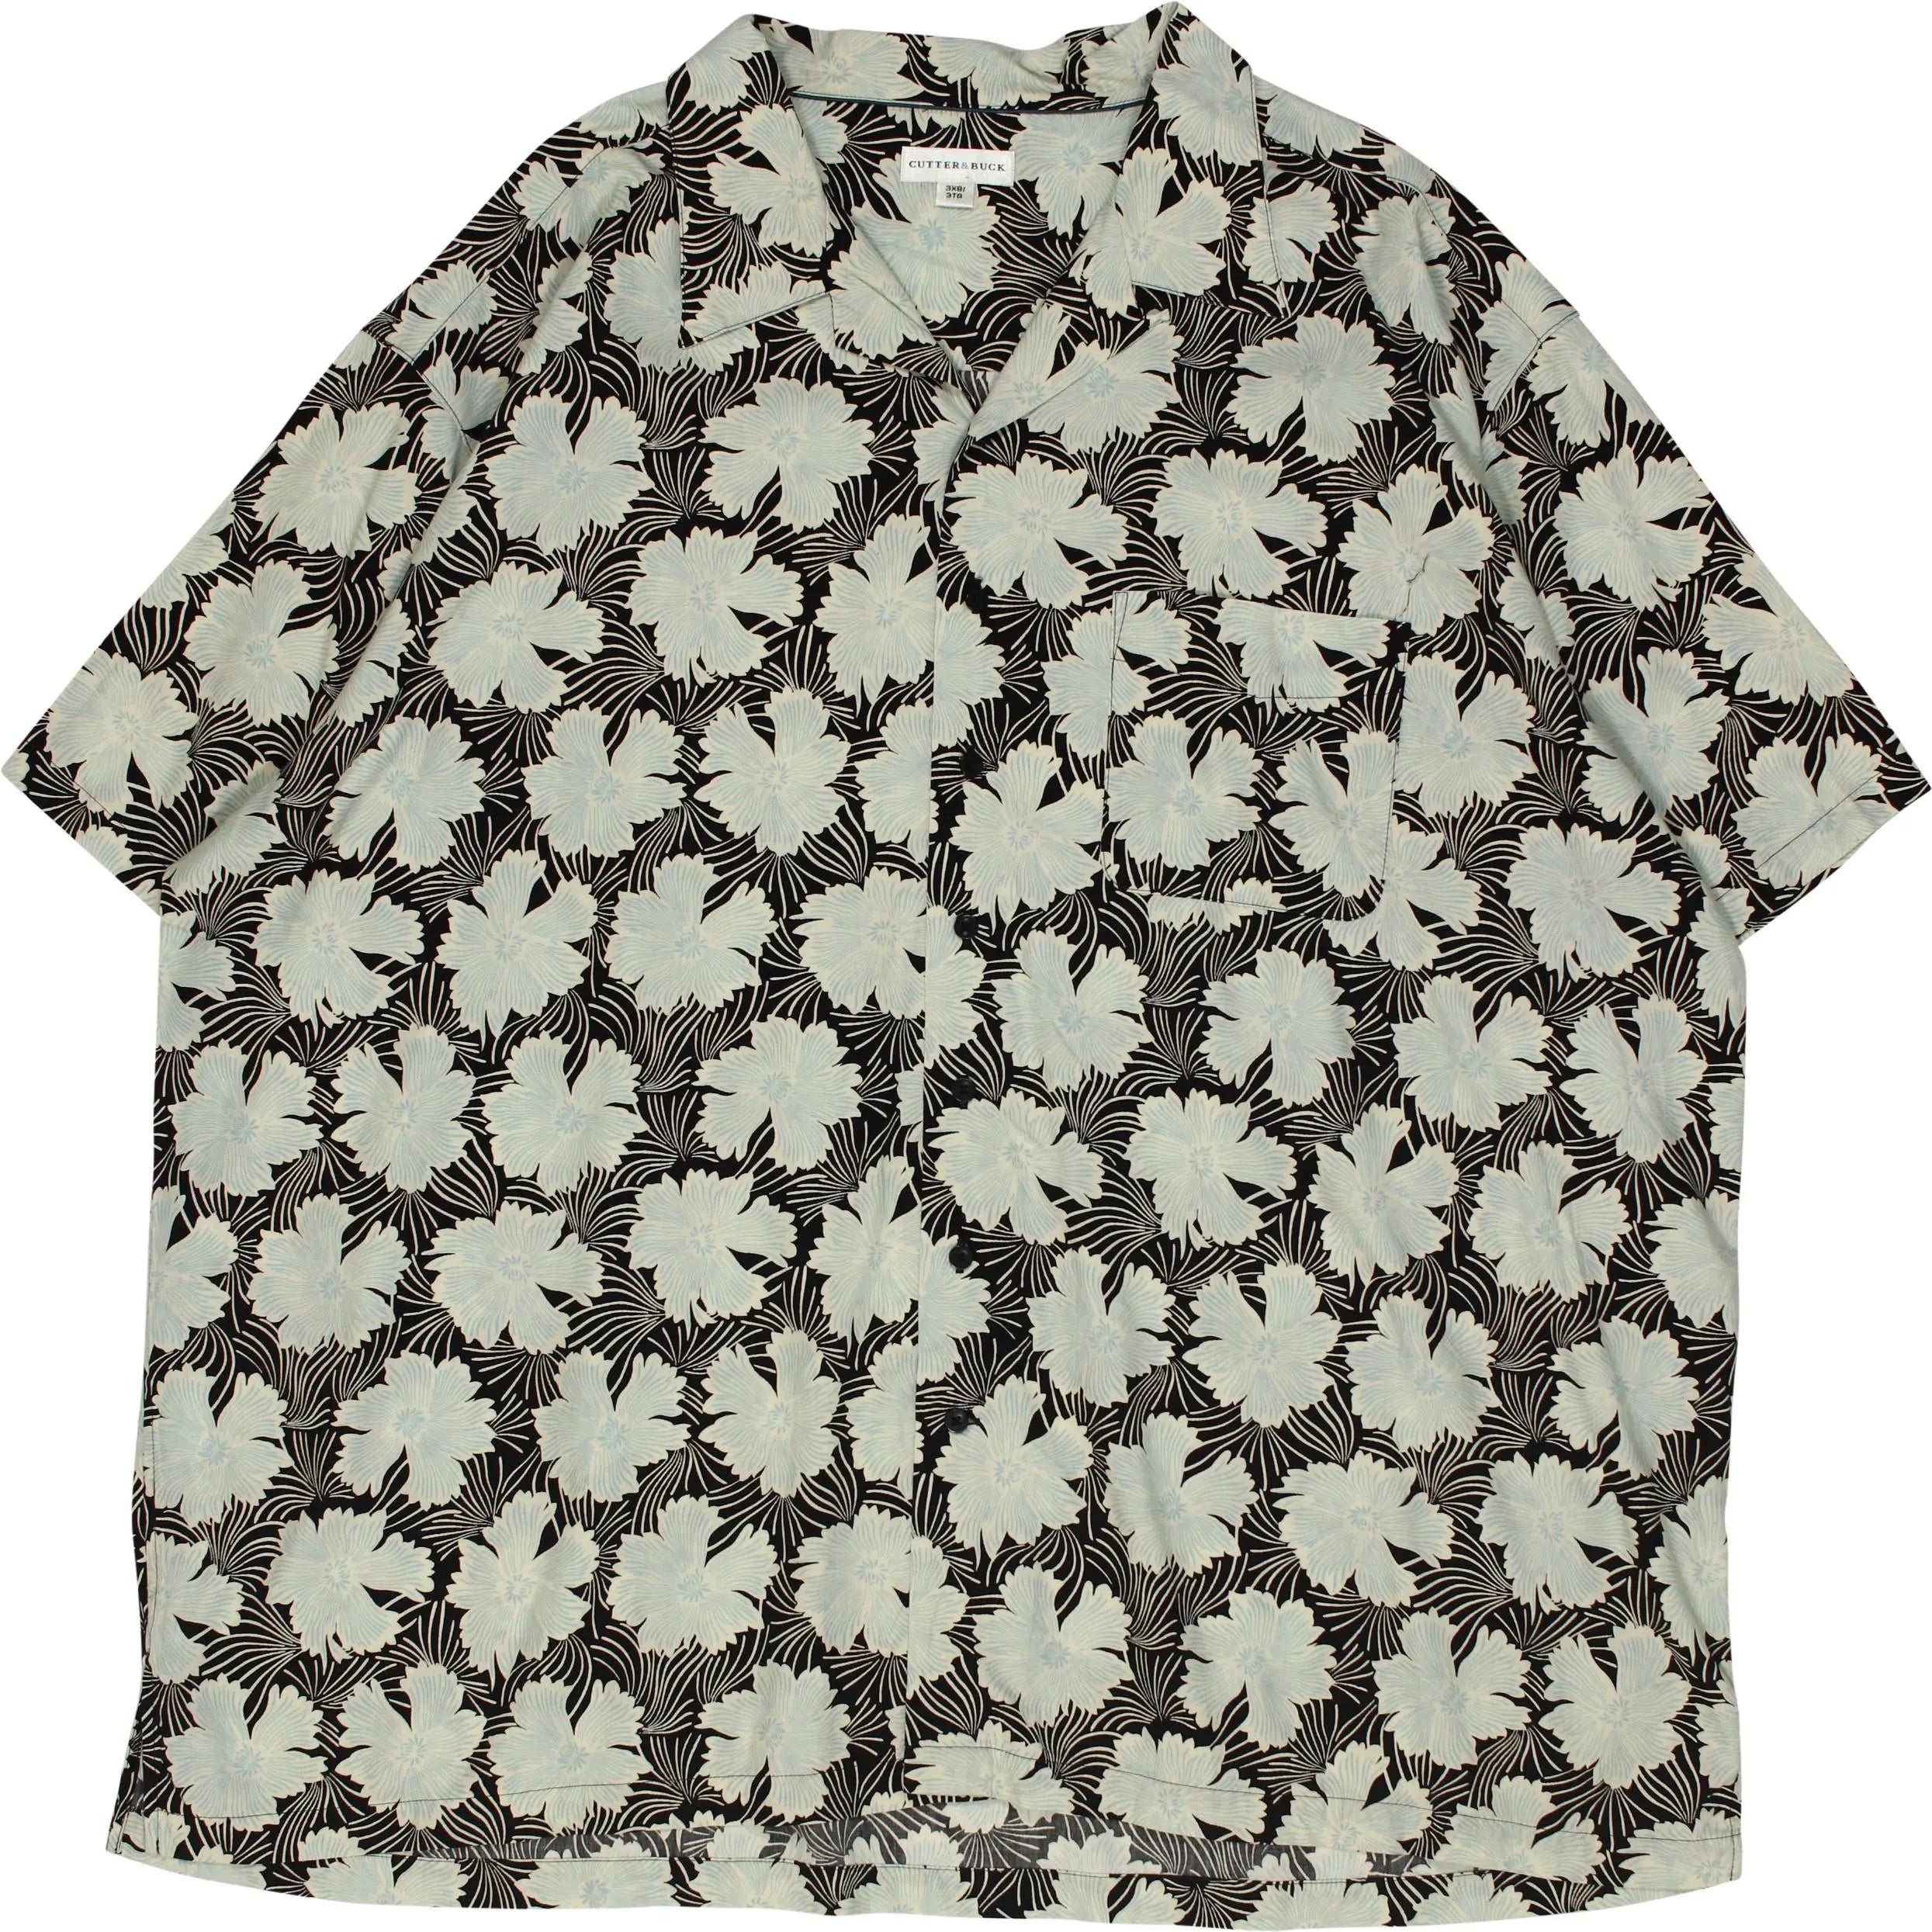 Cutter & Buck - Hawaiian Shirt- ThriftTale.com - Vintage and second handclothing